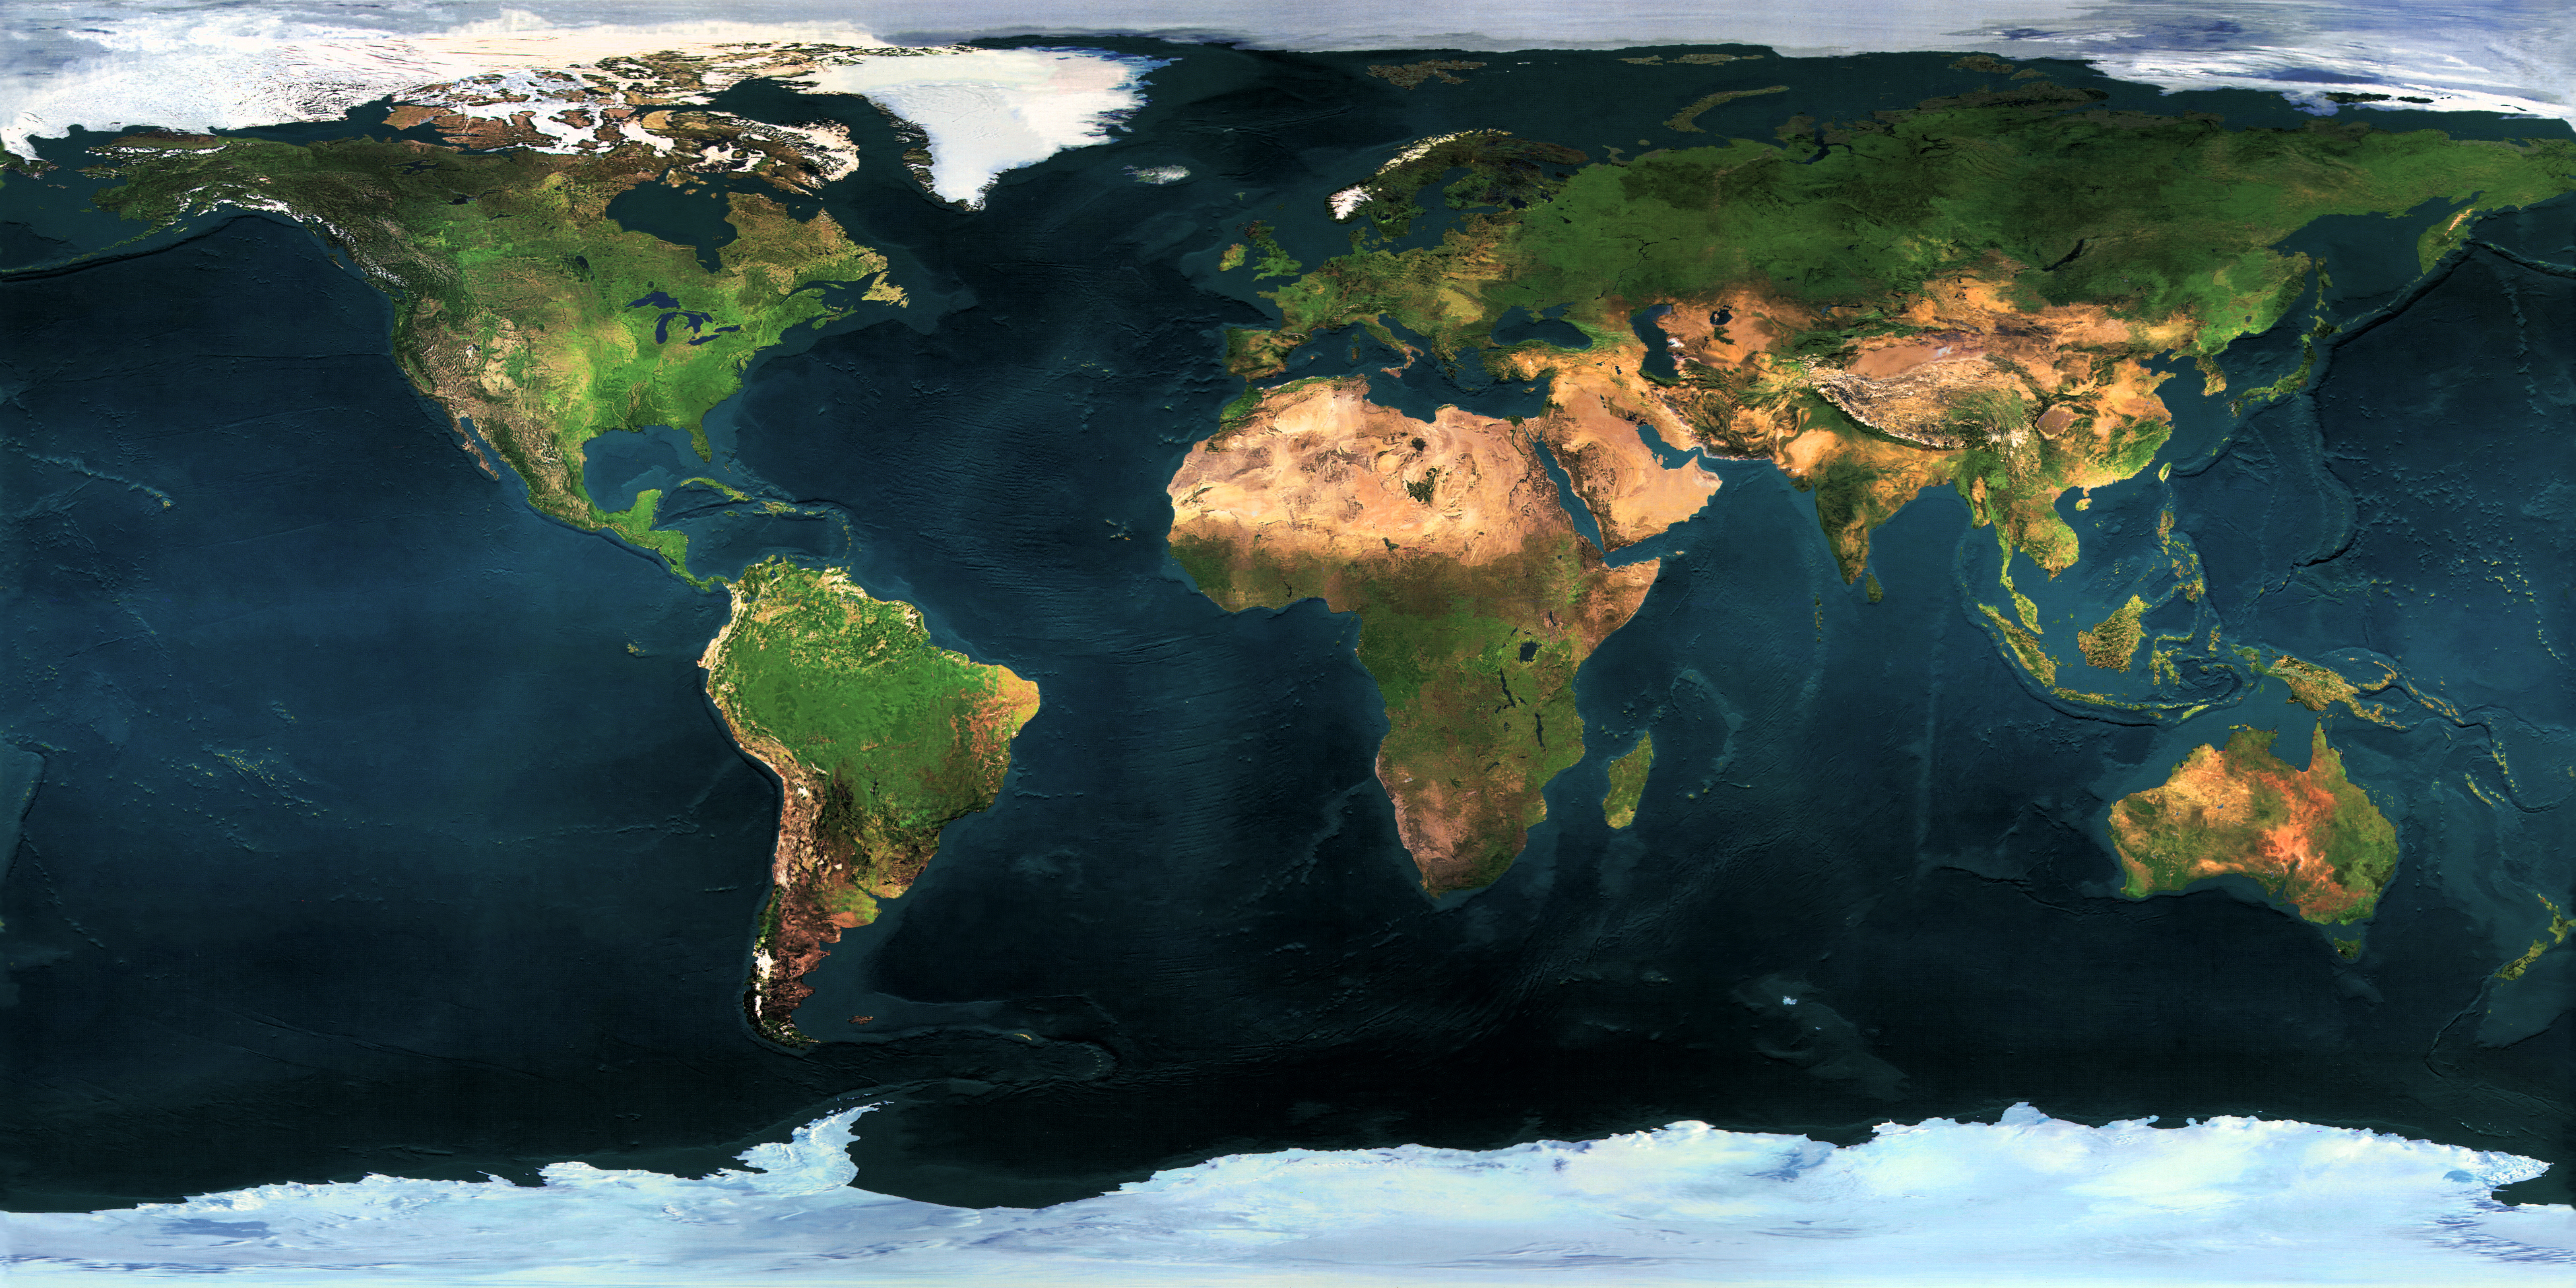 Earth Map Huge | Free Images at Clker.com - vector clip art online